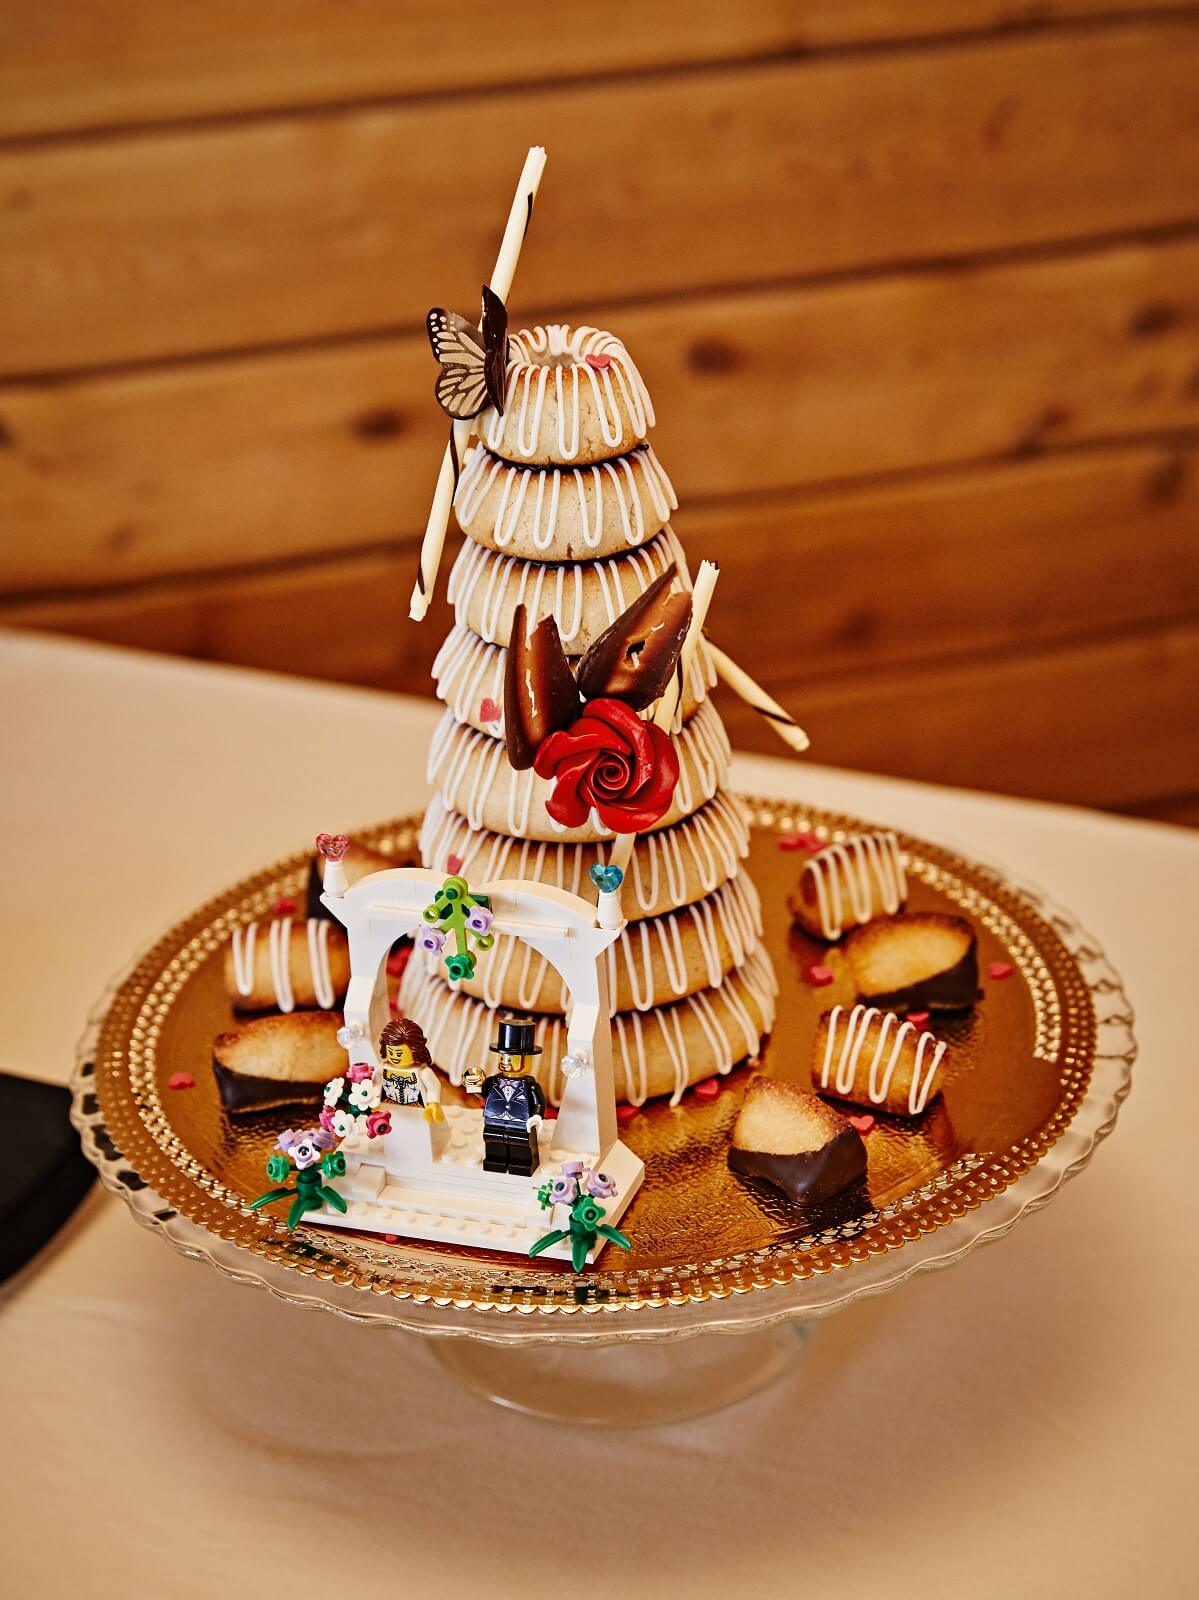 Icelandic kransakaka wedding cake on gold platter with small Lego bride and groom figures.